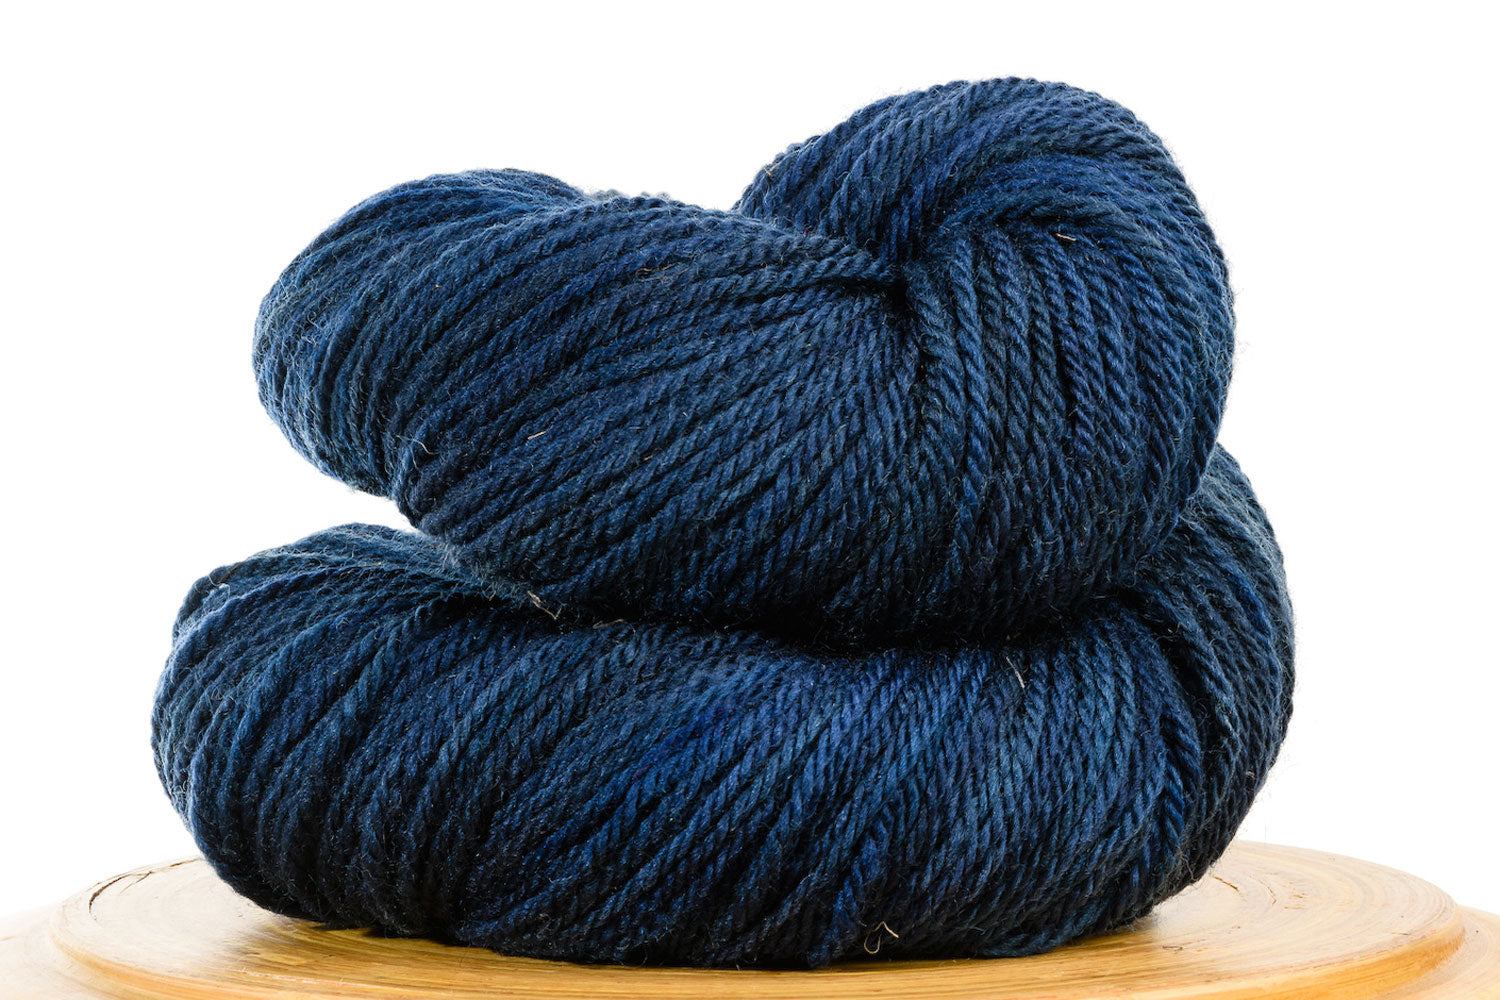 Night Owl - dark navy semi-solid hand-dyed DK weight wool